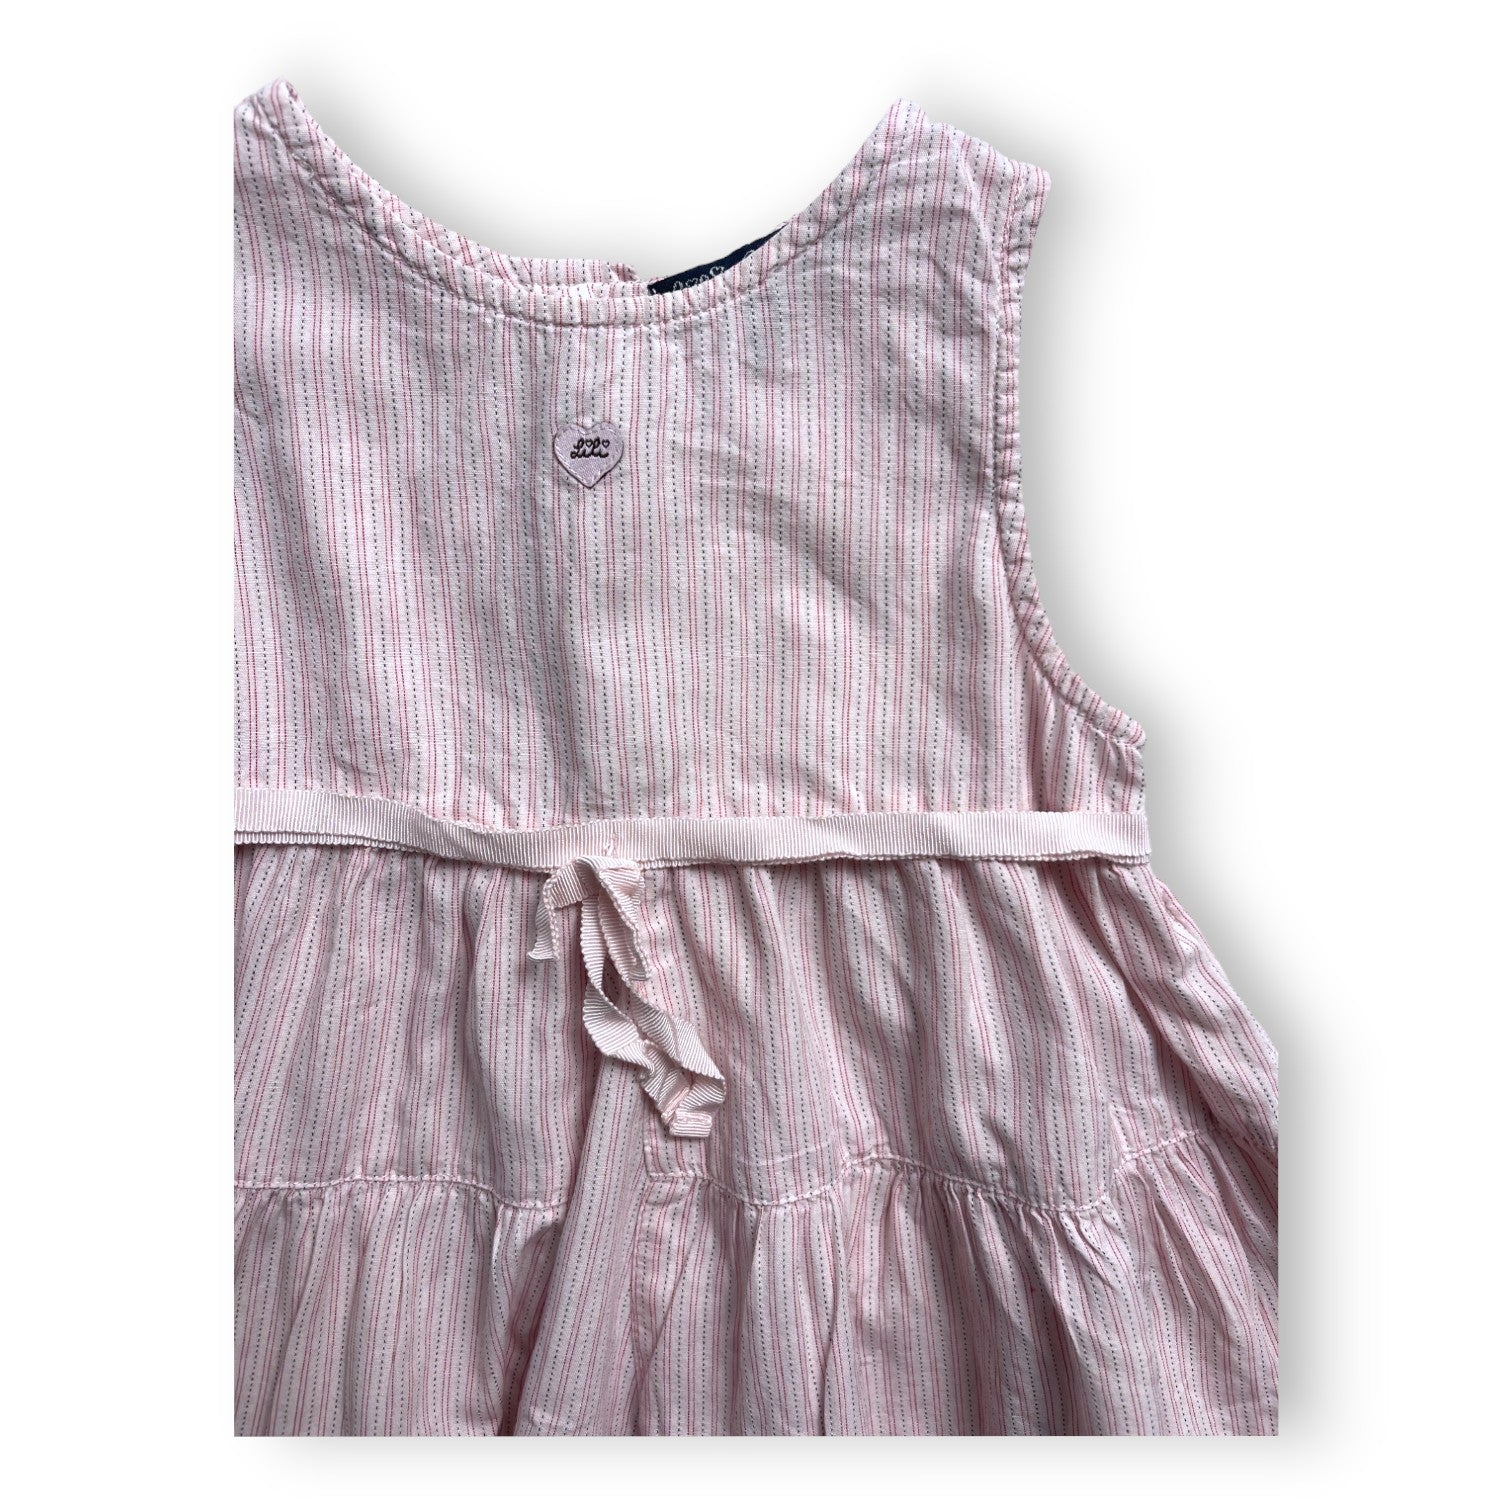 LILI GAUFRETTE - Robe rose rayée - 2 ans